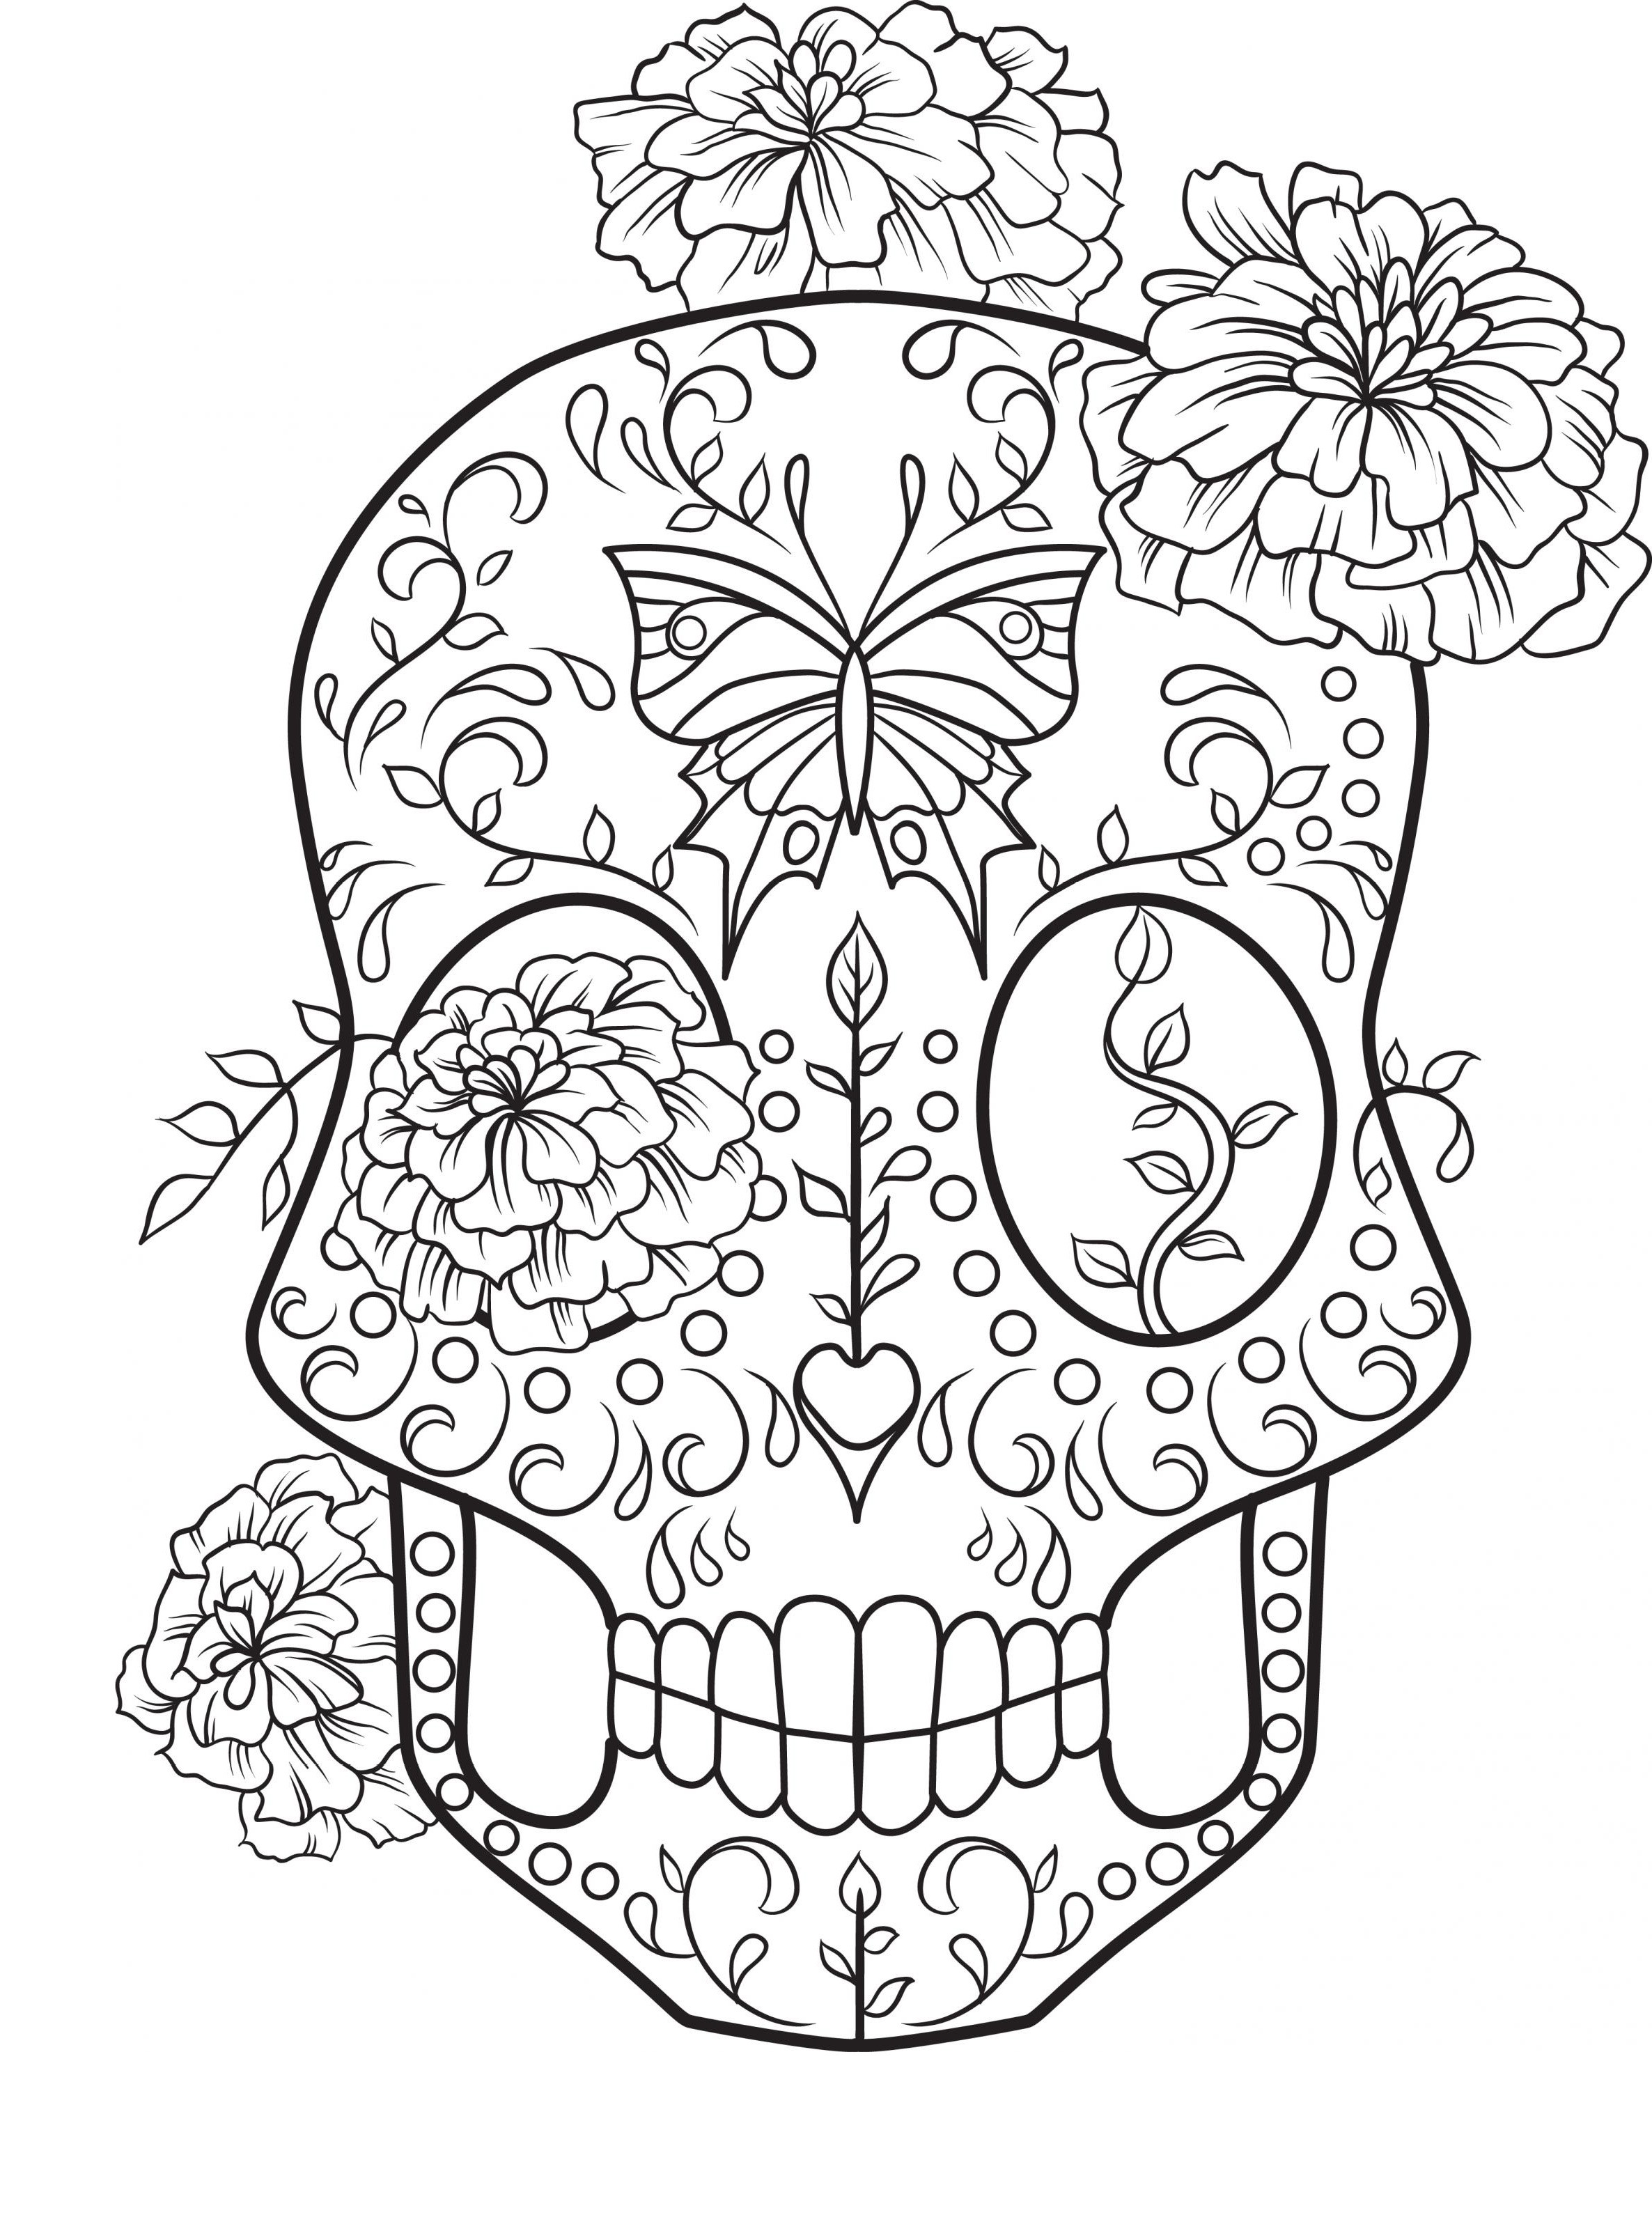 Sugar Skulls Coloring Pages
 Sugar Skull Coloring Page Coloring Home